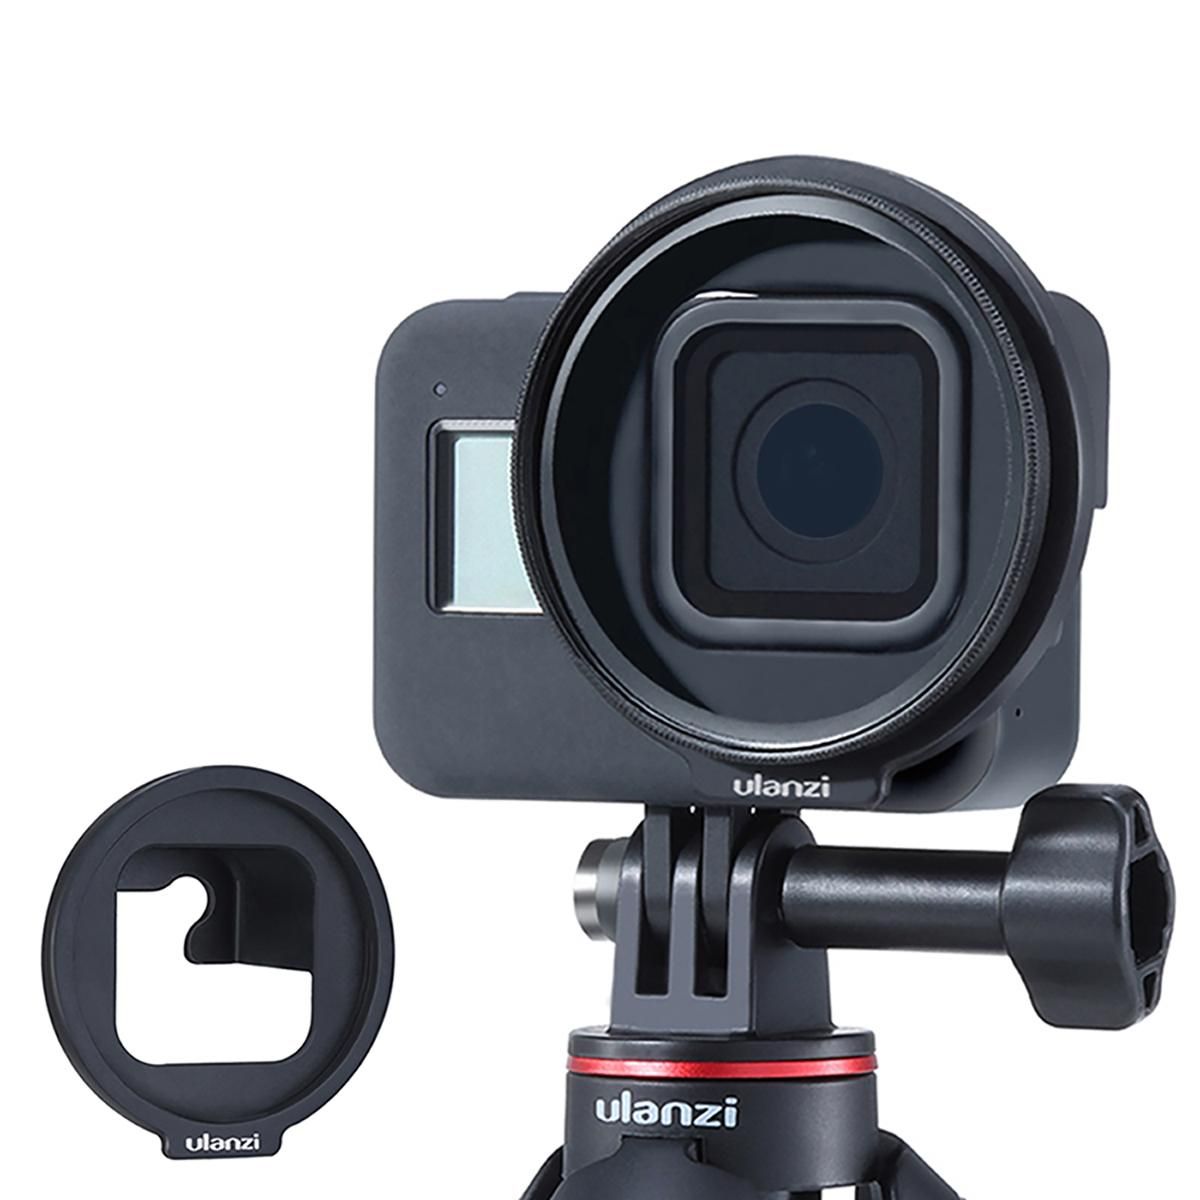 Ulanzi-G8-6-52MM-Lens-Filter-Adapter-Ring-for-Gopro-Hero-8-Converter-Sport-Action-Camera-1614846